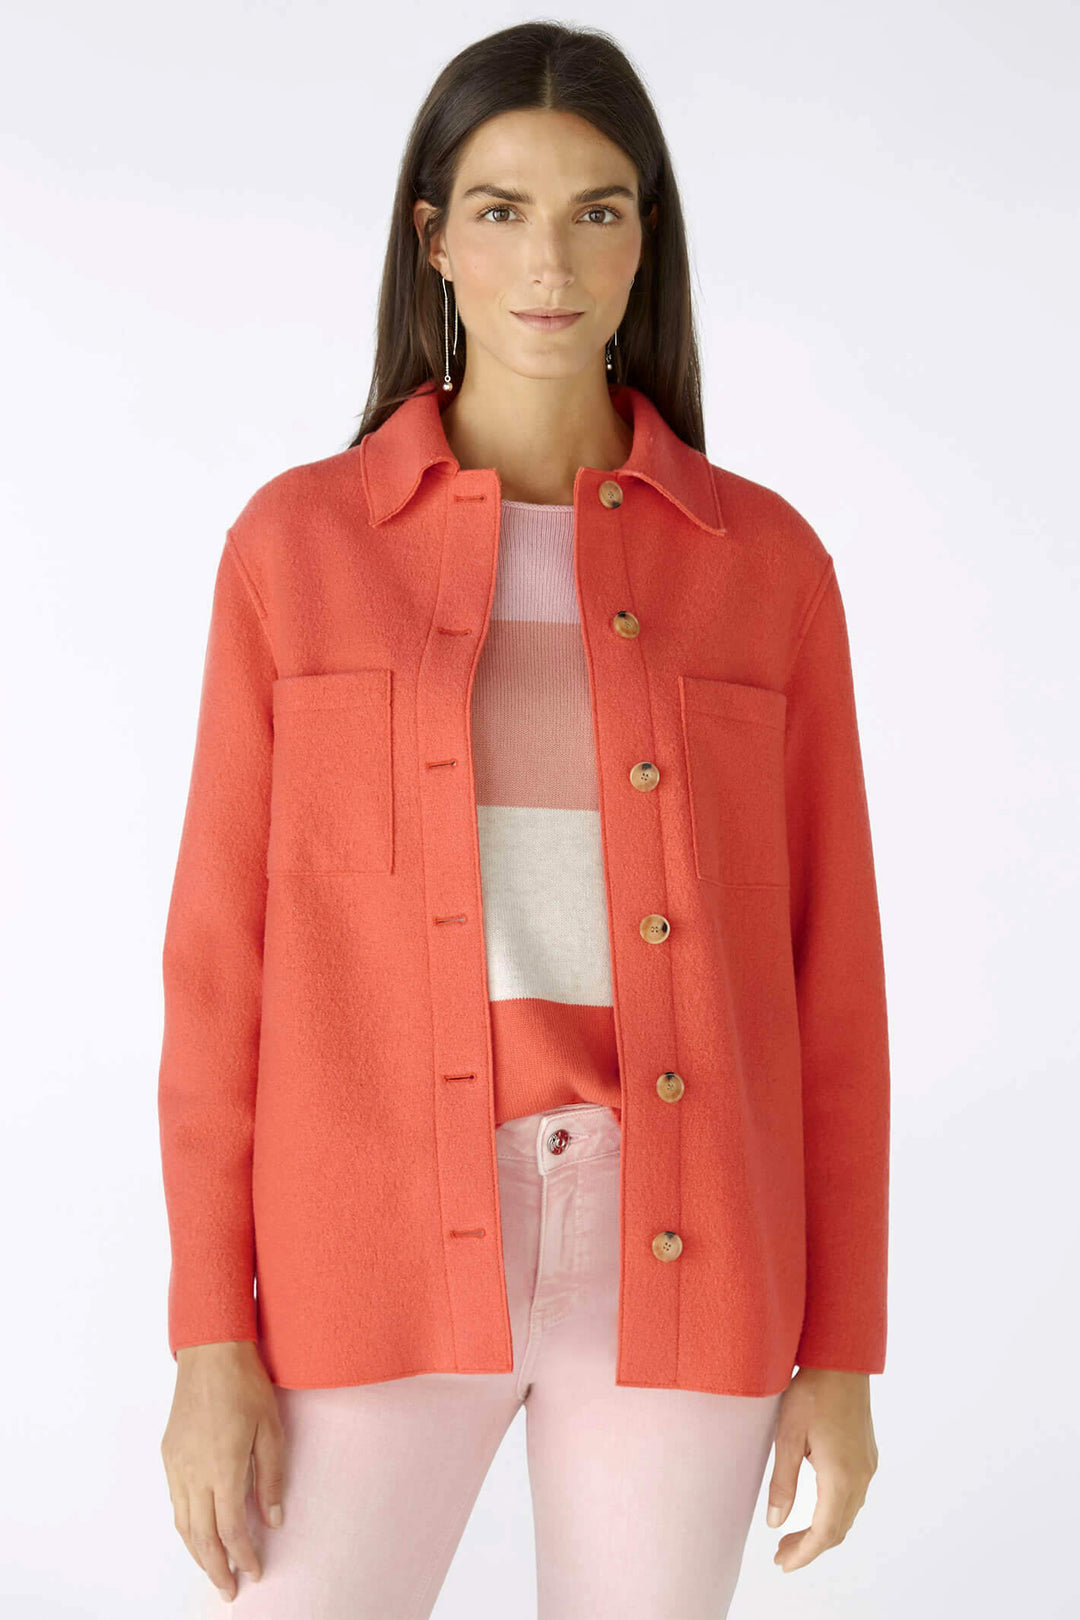 Oui 85802 Coral Button Front Jacket Shacket - Olivia Grace Fashion